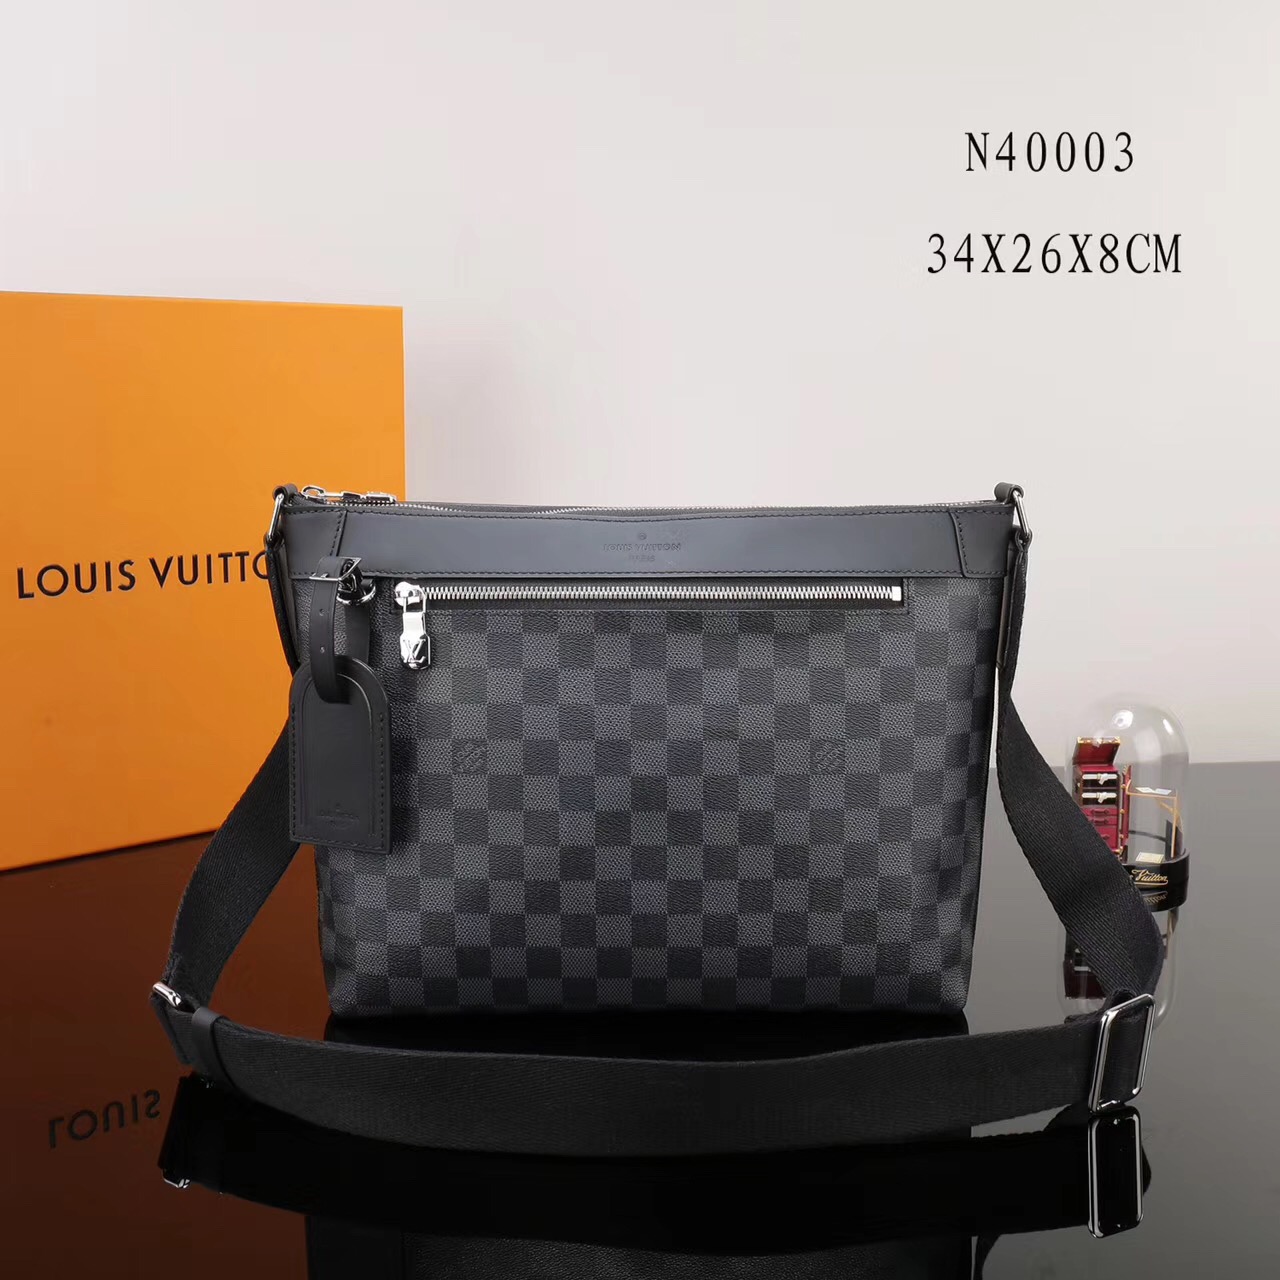 Men LV Louis Vuitton Mick Shoulder Damier bags N40003 Graphite Handbags